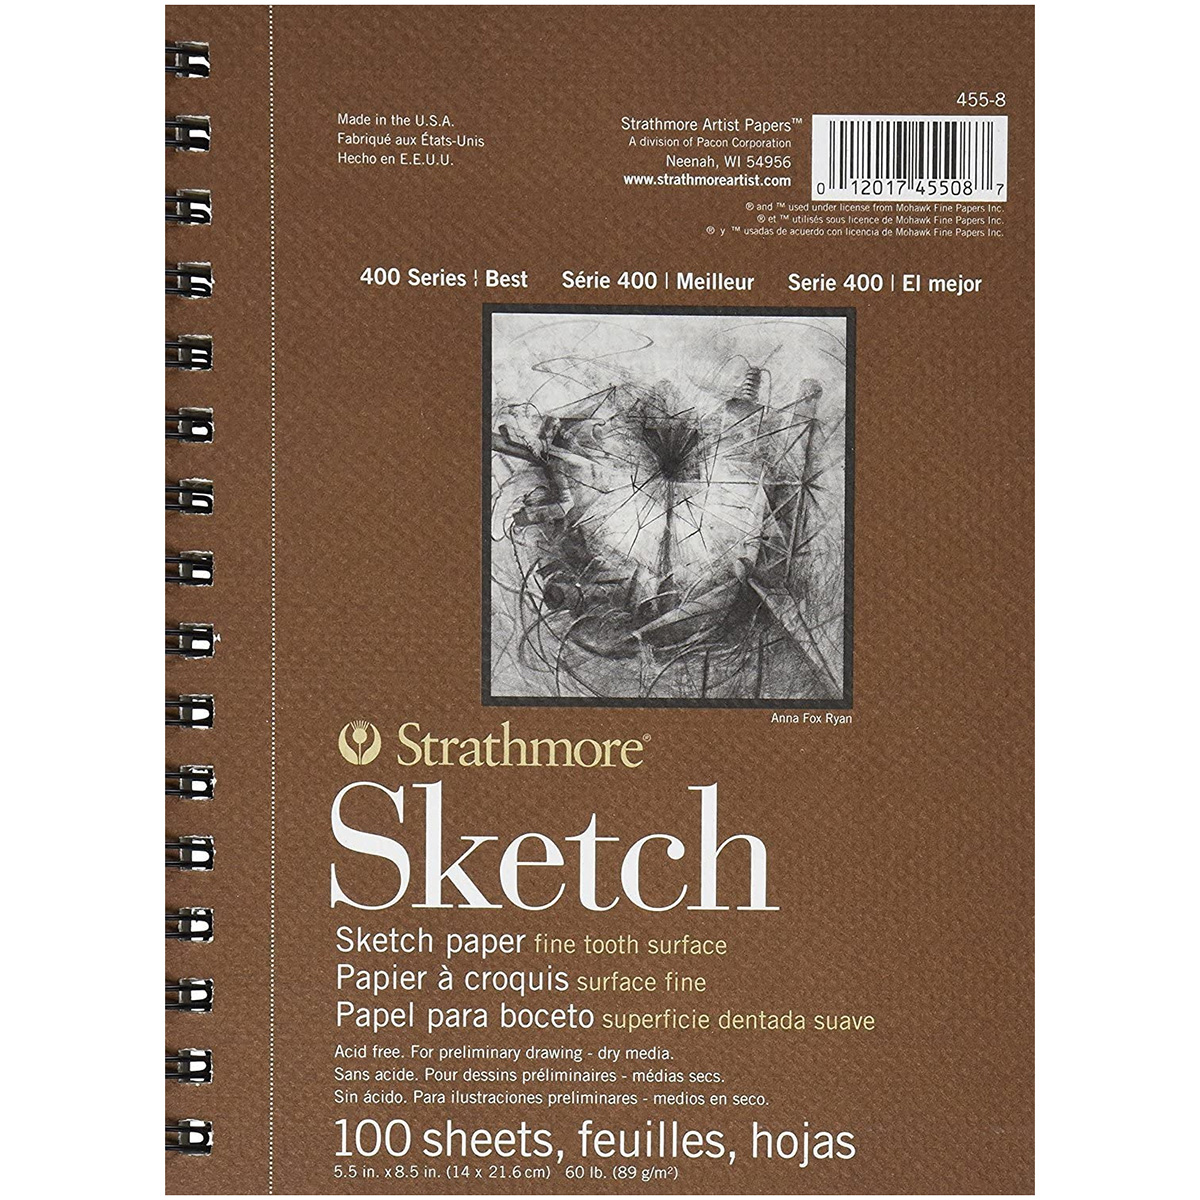 Strathmore Sketch pad